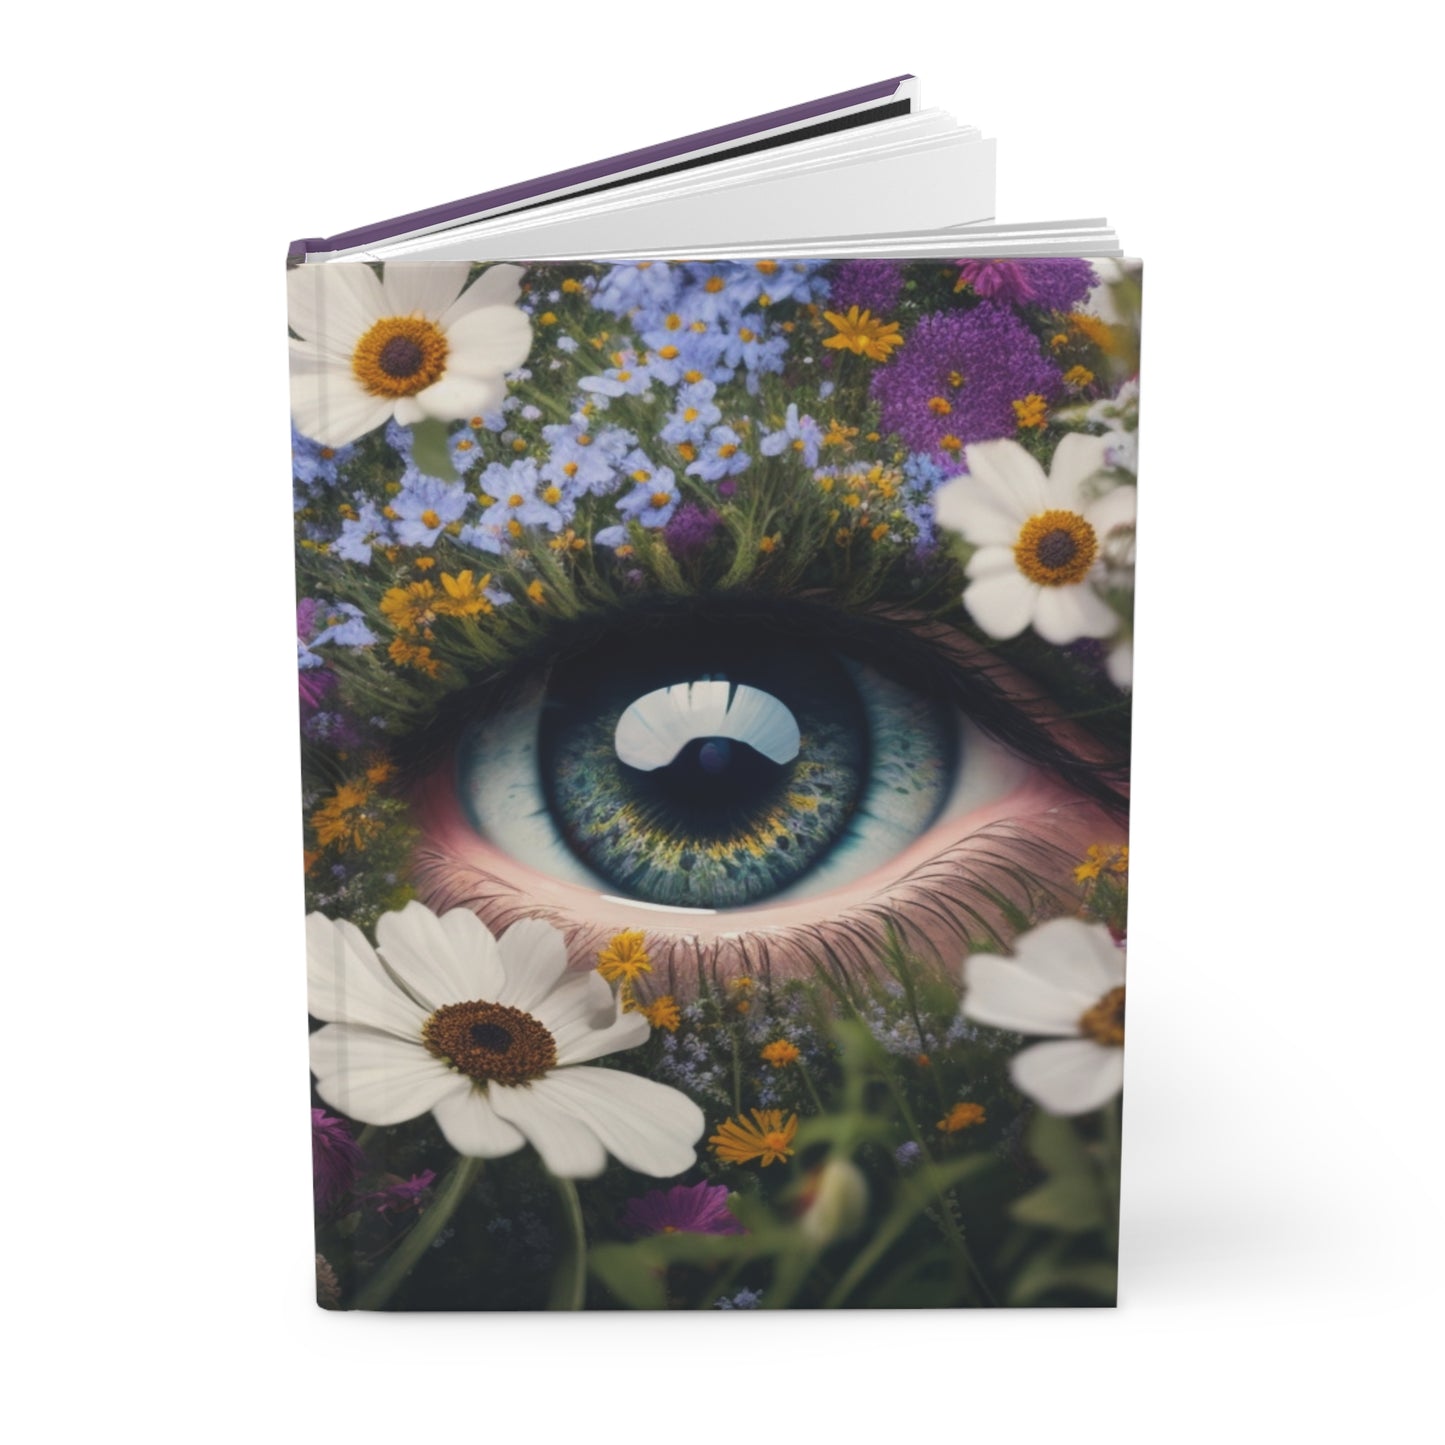 Wildflower Meadow Eye Hardcover Notebook, Unique Journal, Creative Reflections, Gratitude & Wellness, Self-Care, Desk Accessory, 5.75"x7.5"